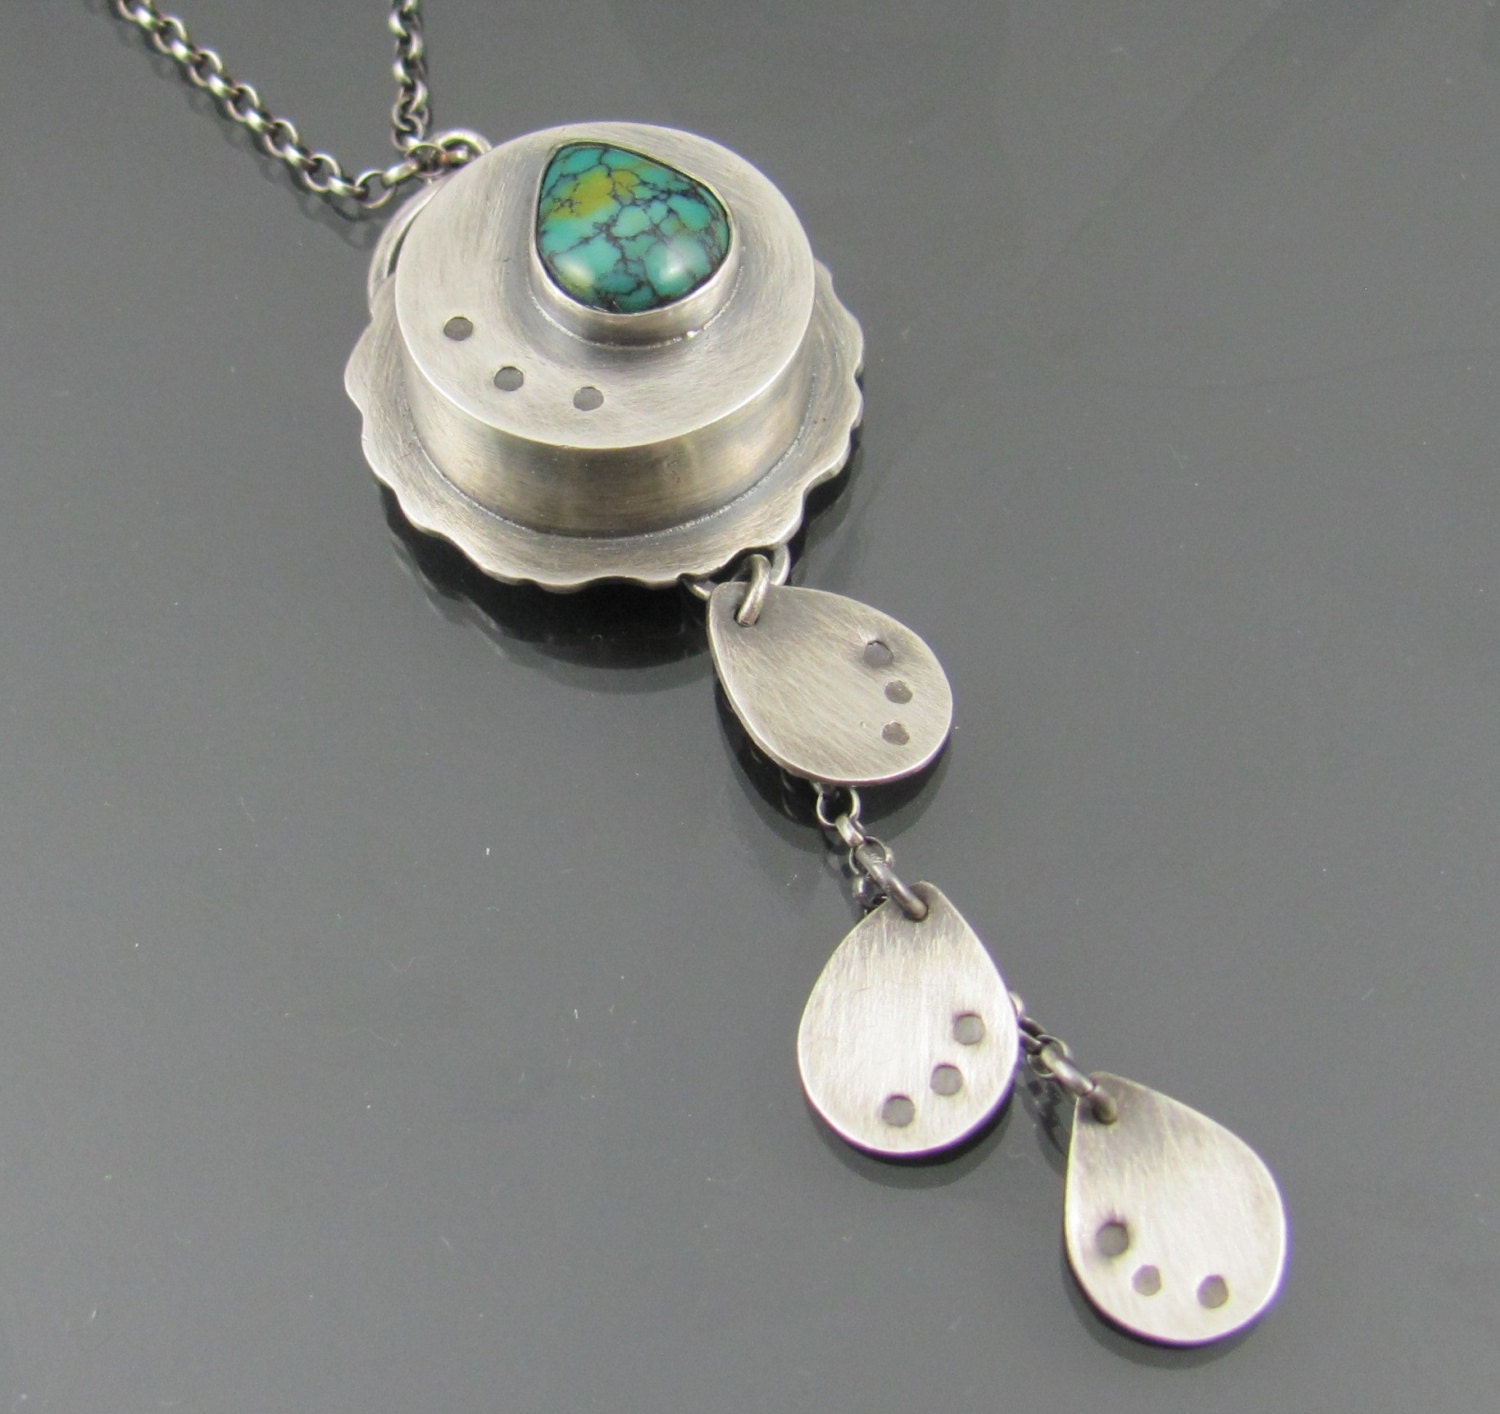 Turquoise rain sterling silver necklace - turquoise necklace - gemstone necklace - blue rain necklace - hallmark necklace - NRjewellerydesign